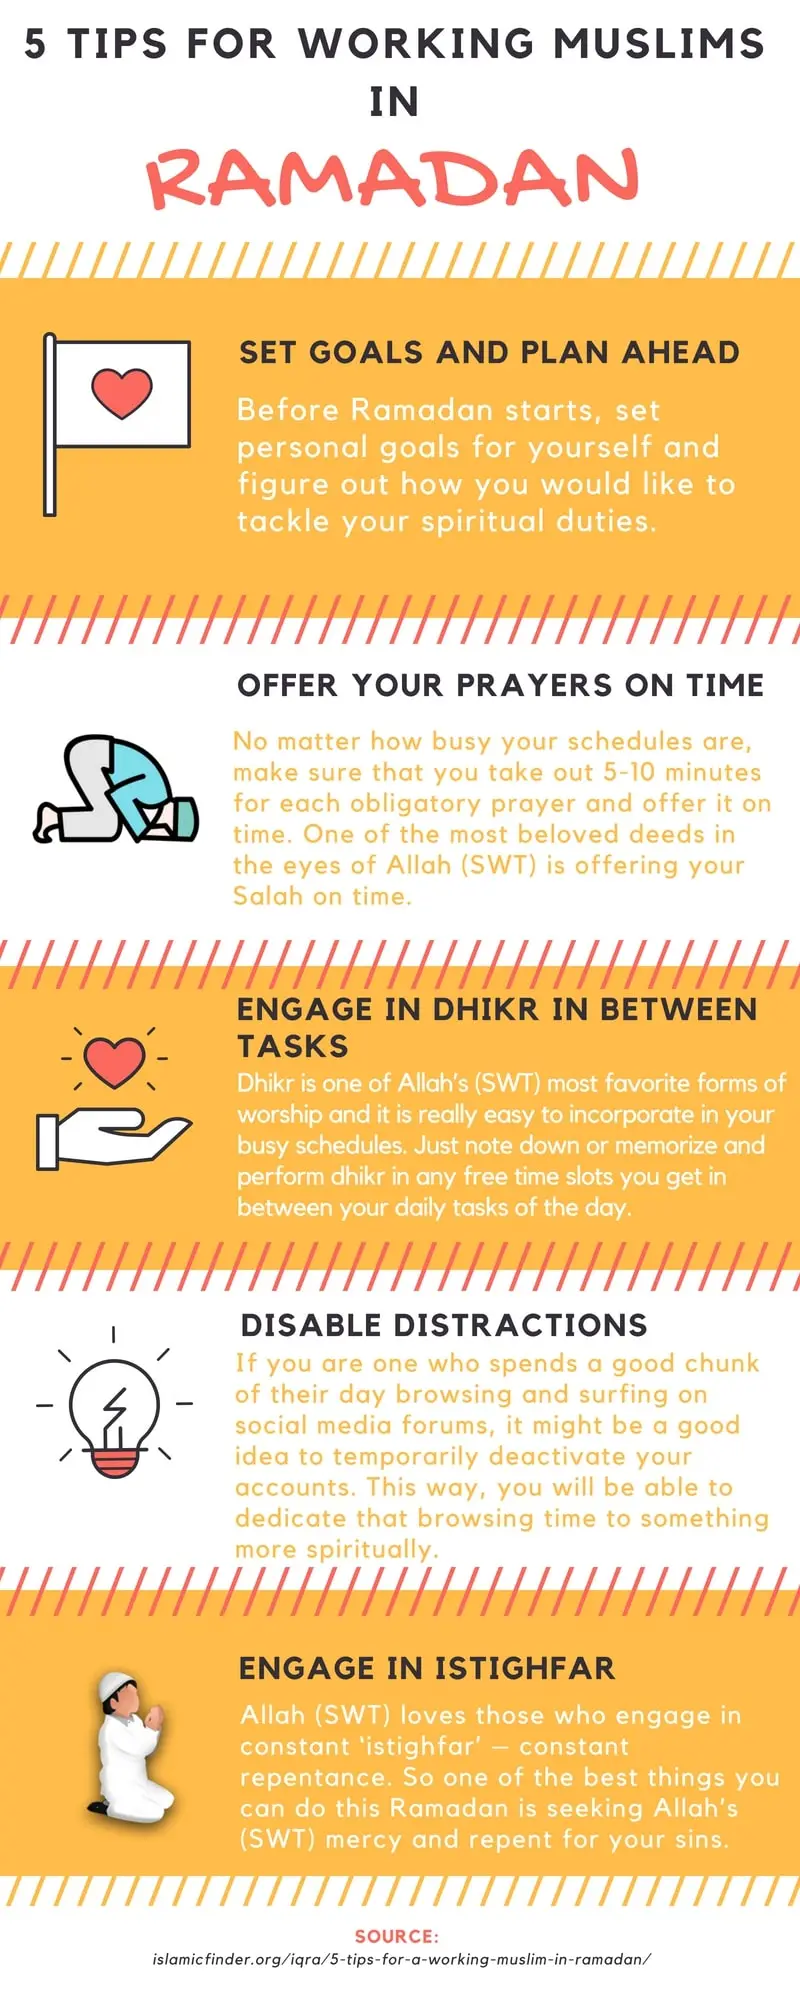 5 TIPS FOR WORKING MUSLIMS IN RAMADAN